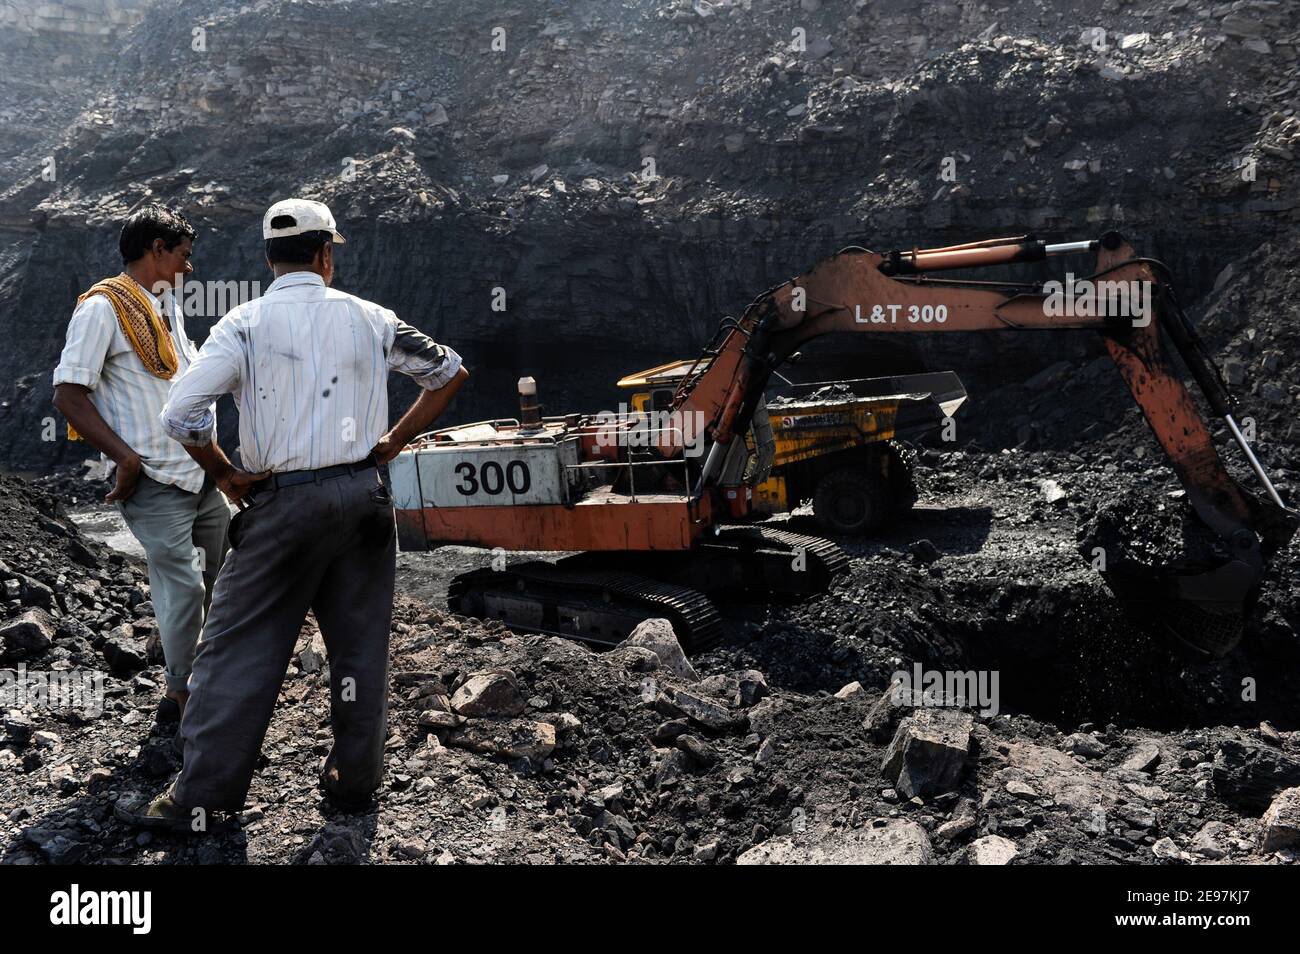 INDIA Dhanbad, open-cast coal mining of BCCL Ltd a company of COAL INDIA , L&T digger and large BEML dumper / INDIEN Dhanbad , offener Kohle Tagebau von BCCL Ltd. ein Tochterunternehmen von Coal India Stock Photo